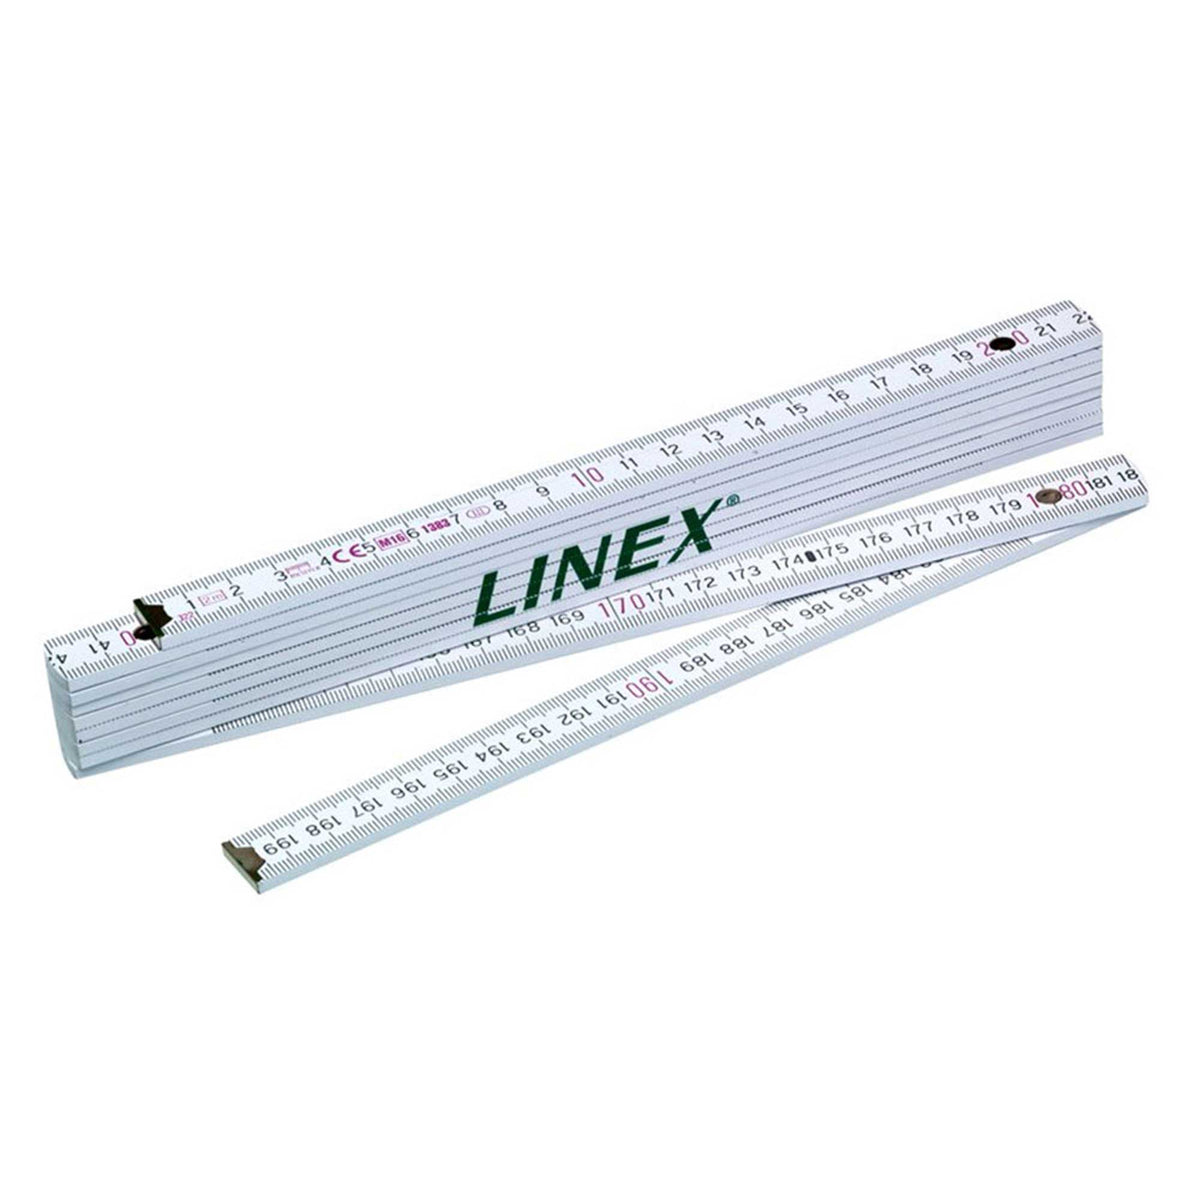 Linex Wooden Folding Ruler - 2m/78&quot;